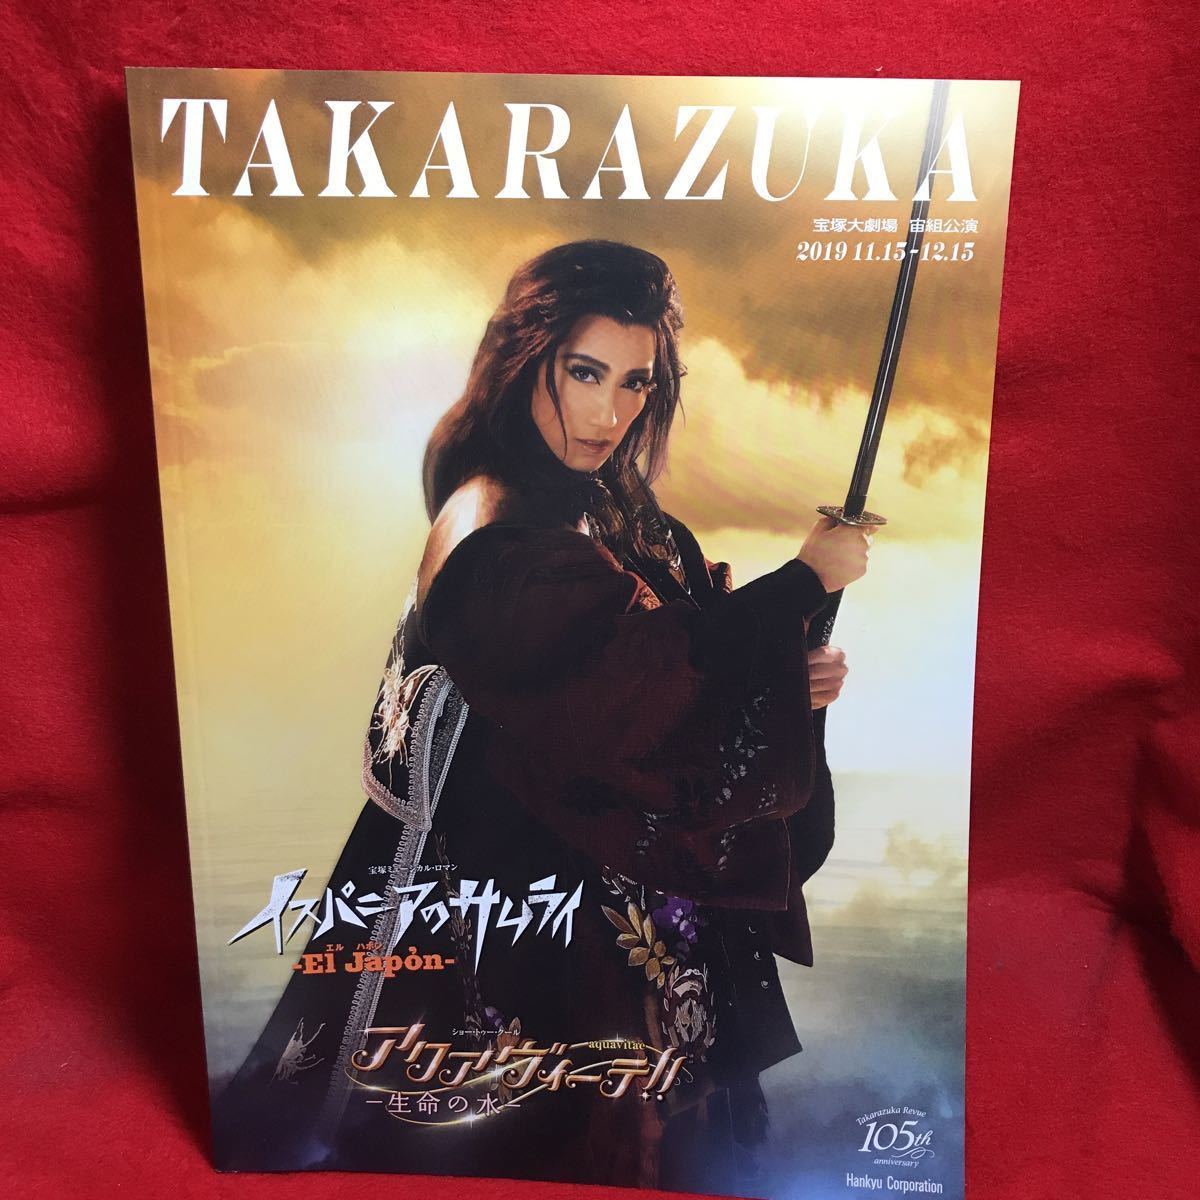 VTAKARAZUKA Takarazuka Grand Theater . collection ..2019 EL Japon chair pannier. Samurai aqua vi -te pamphlet genuine manner .. star manner .......